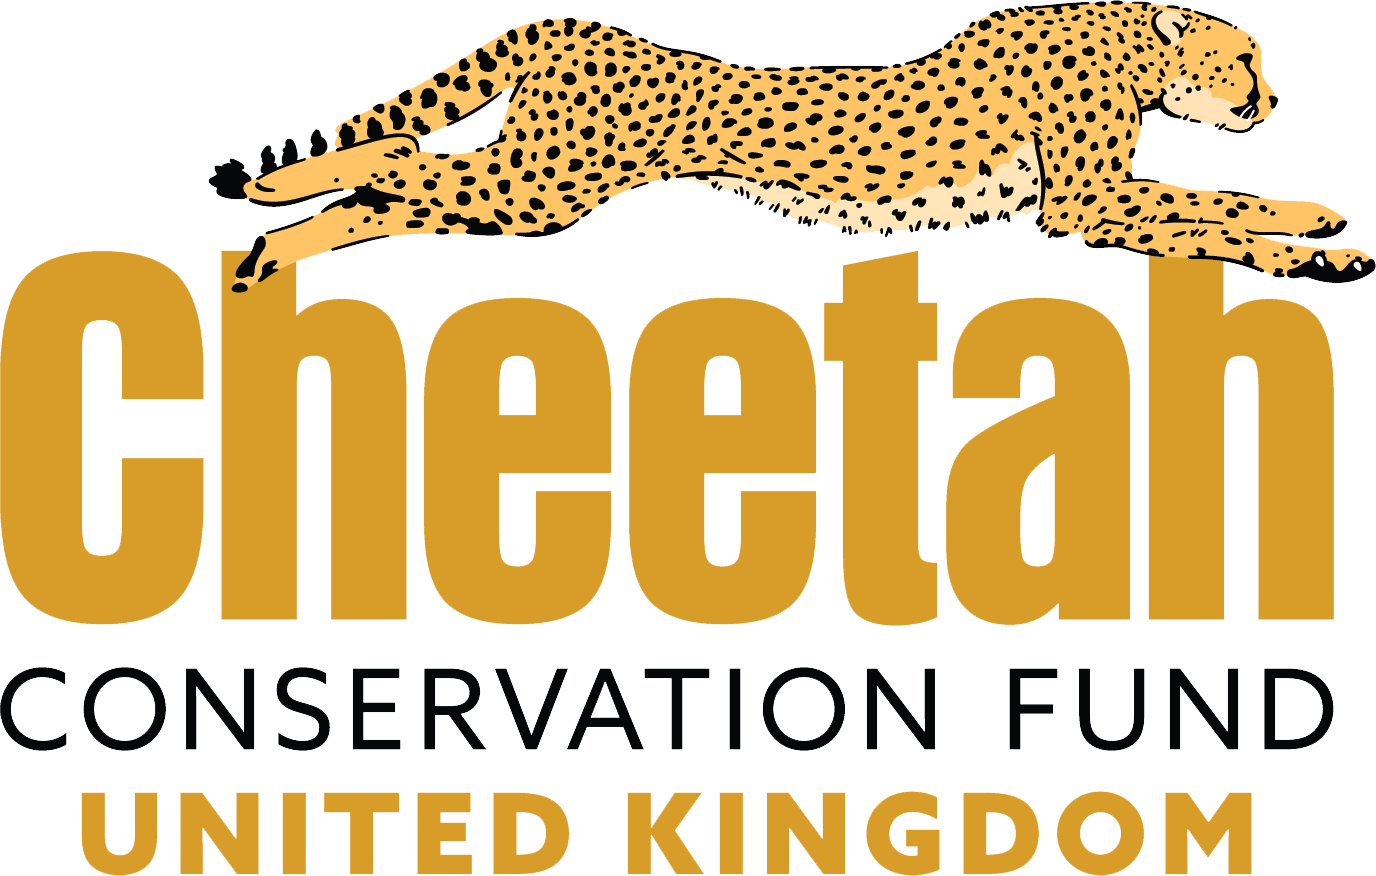 Cheetah Conservation Fund UK logo